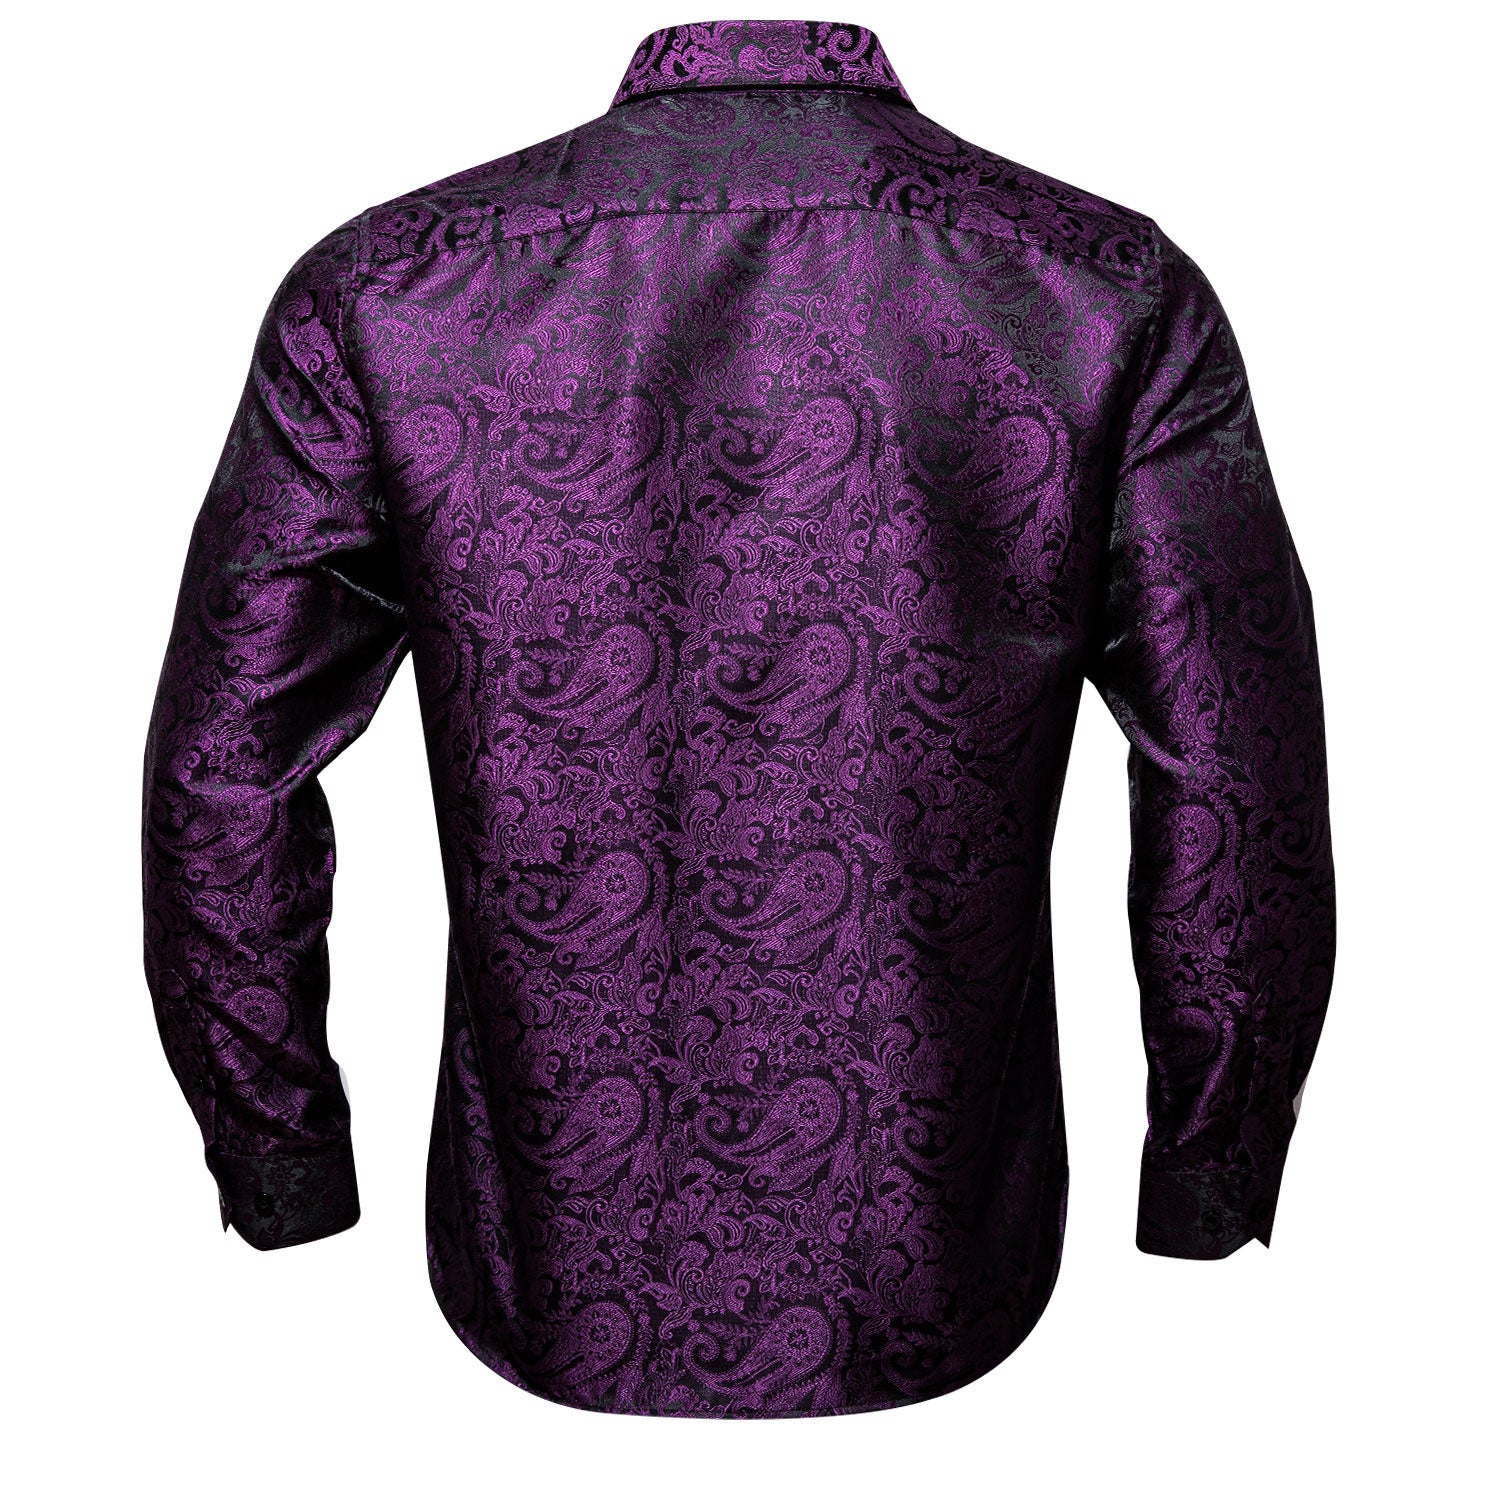 Barry.wang Button Down Shirt Purple Black Paisley Dress Shirt for Men